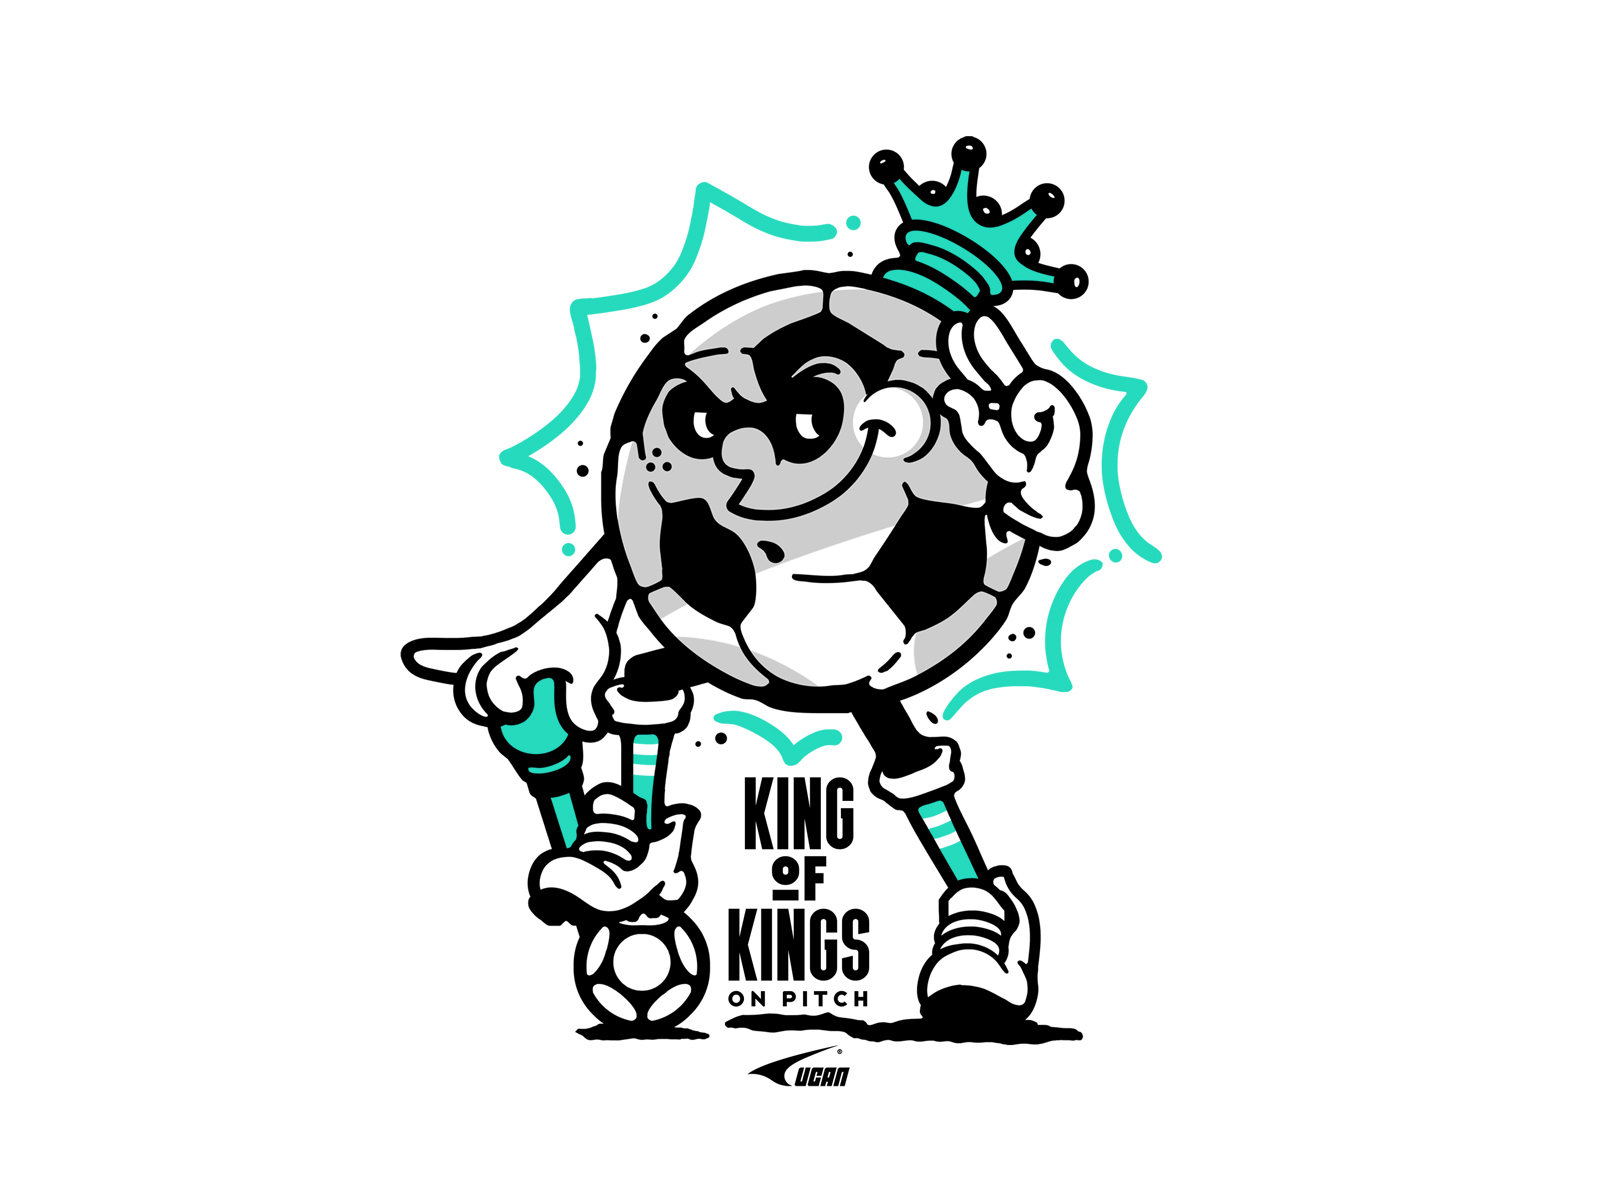 KINGofKINGS athletic sports field pitch king gear football soccer illustration vintage font mascot